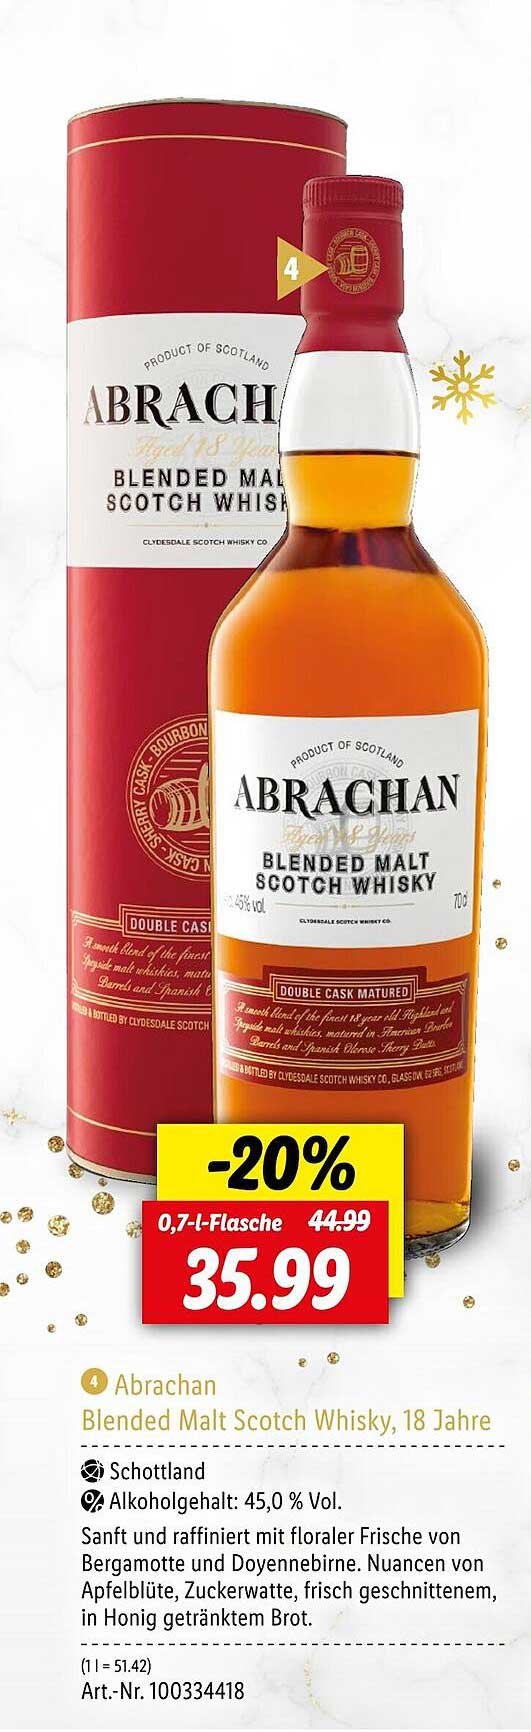 Lidl Malt bei Whisky, Blended 18 Jahre Scotch Abrachan Angebot